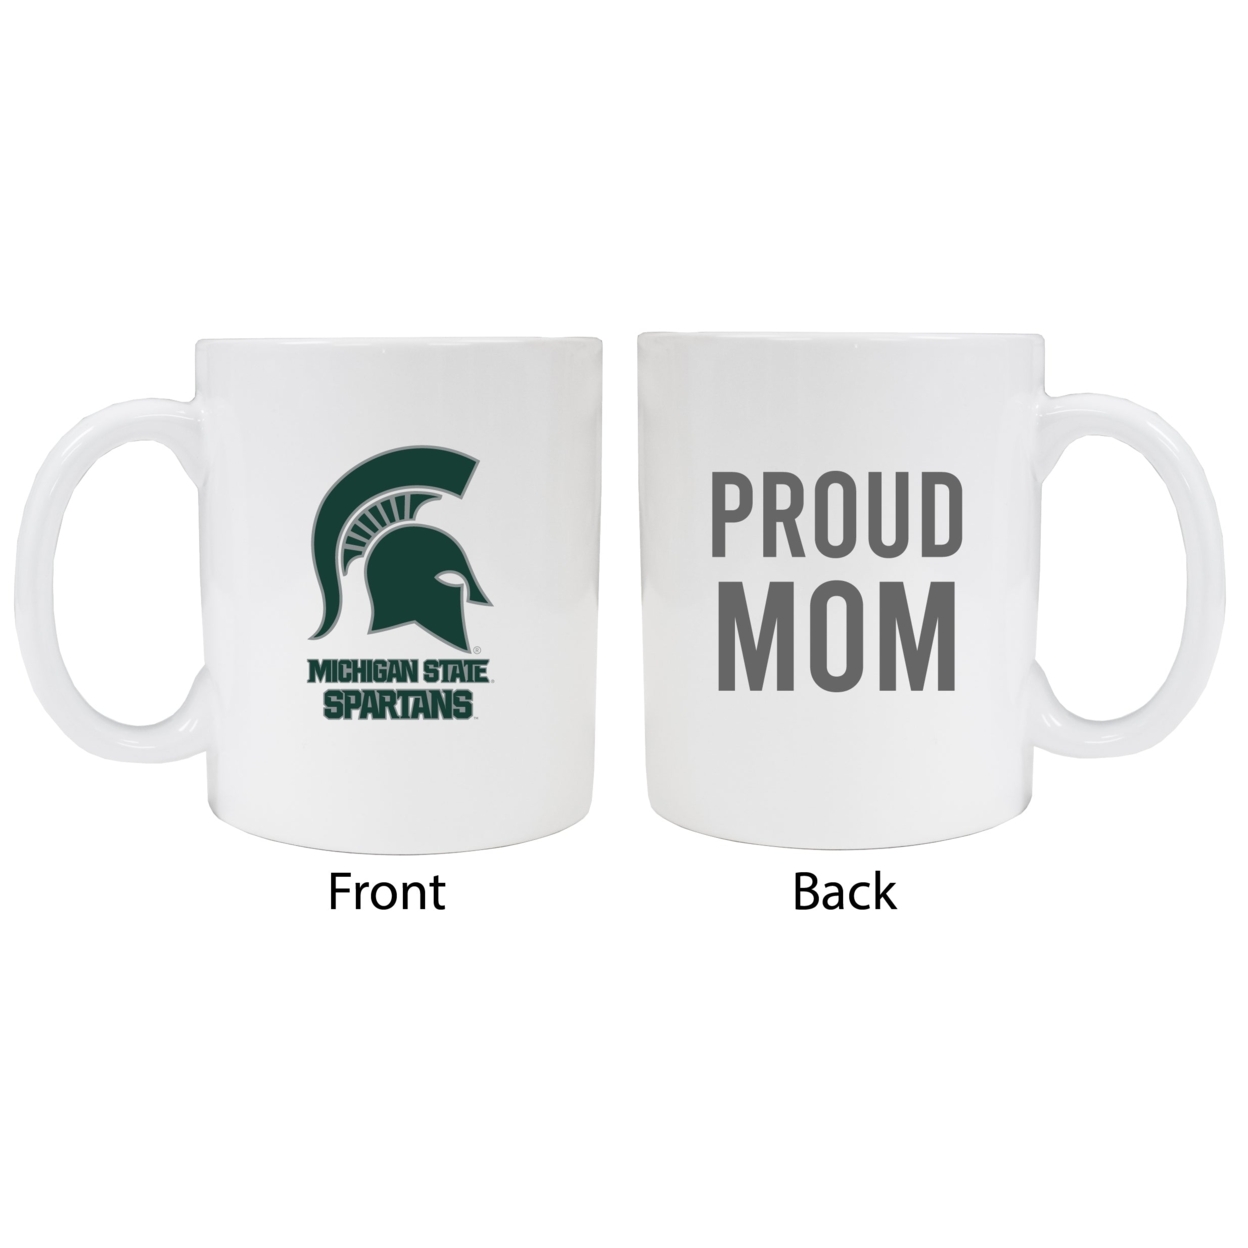 Michigan State Spartans Proud Mom Ceramic Coffee Mug - White (2 Pack)